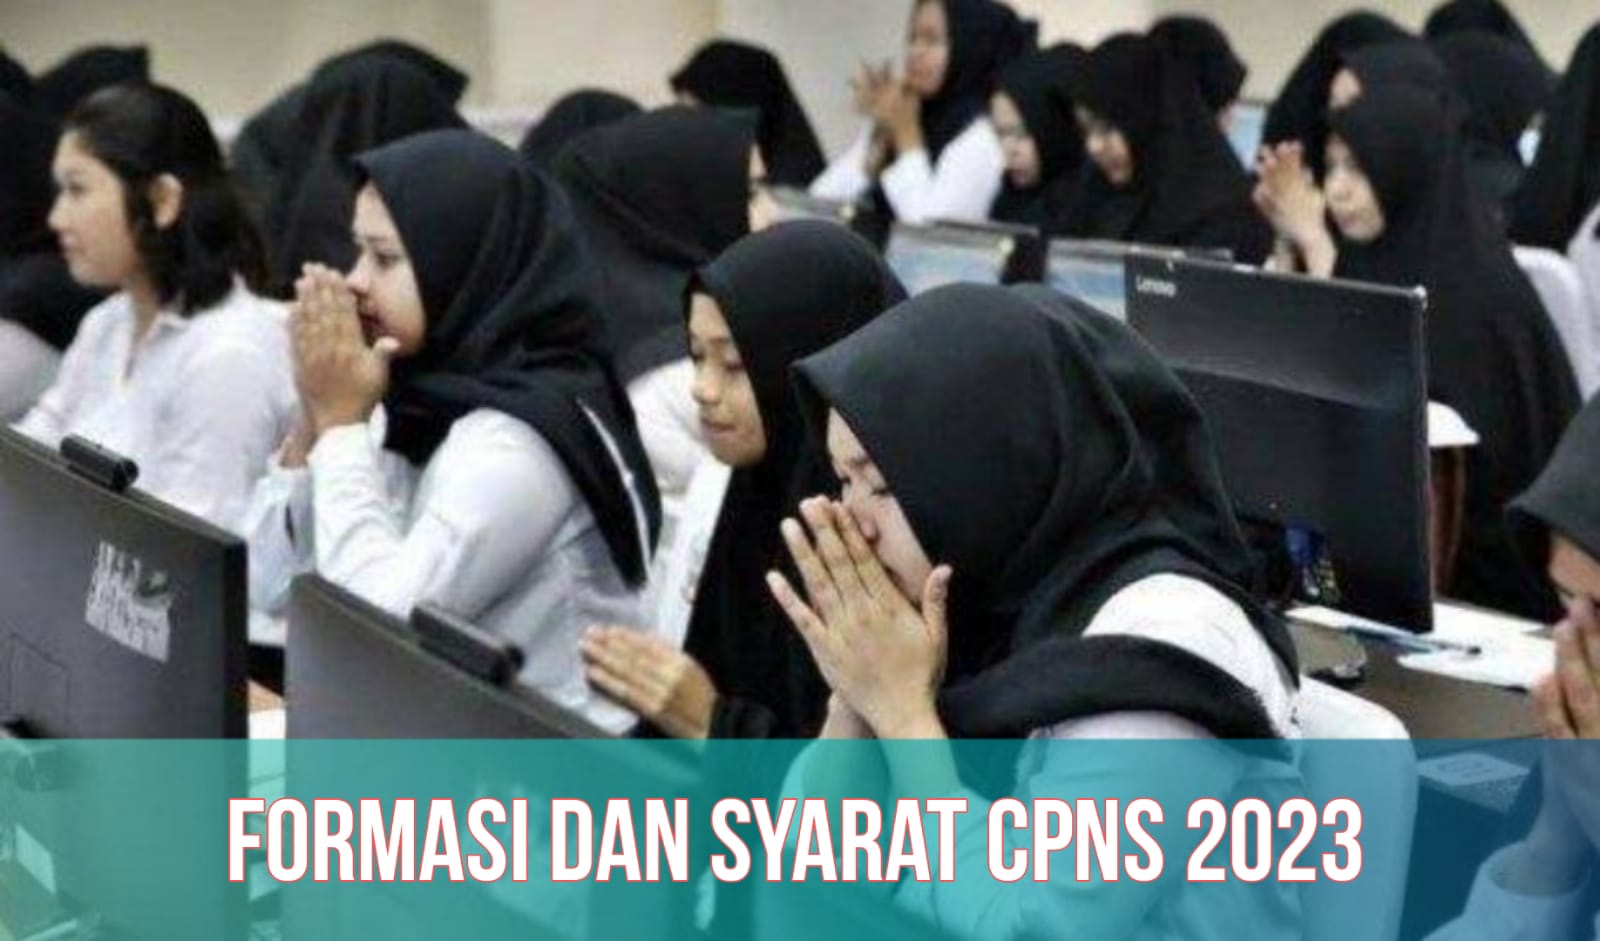 Dibuka 17 September, Cek Rincian Formasi CPNS 2023, Lengkap dengan Syarat, hingga Link Pendaftaran